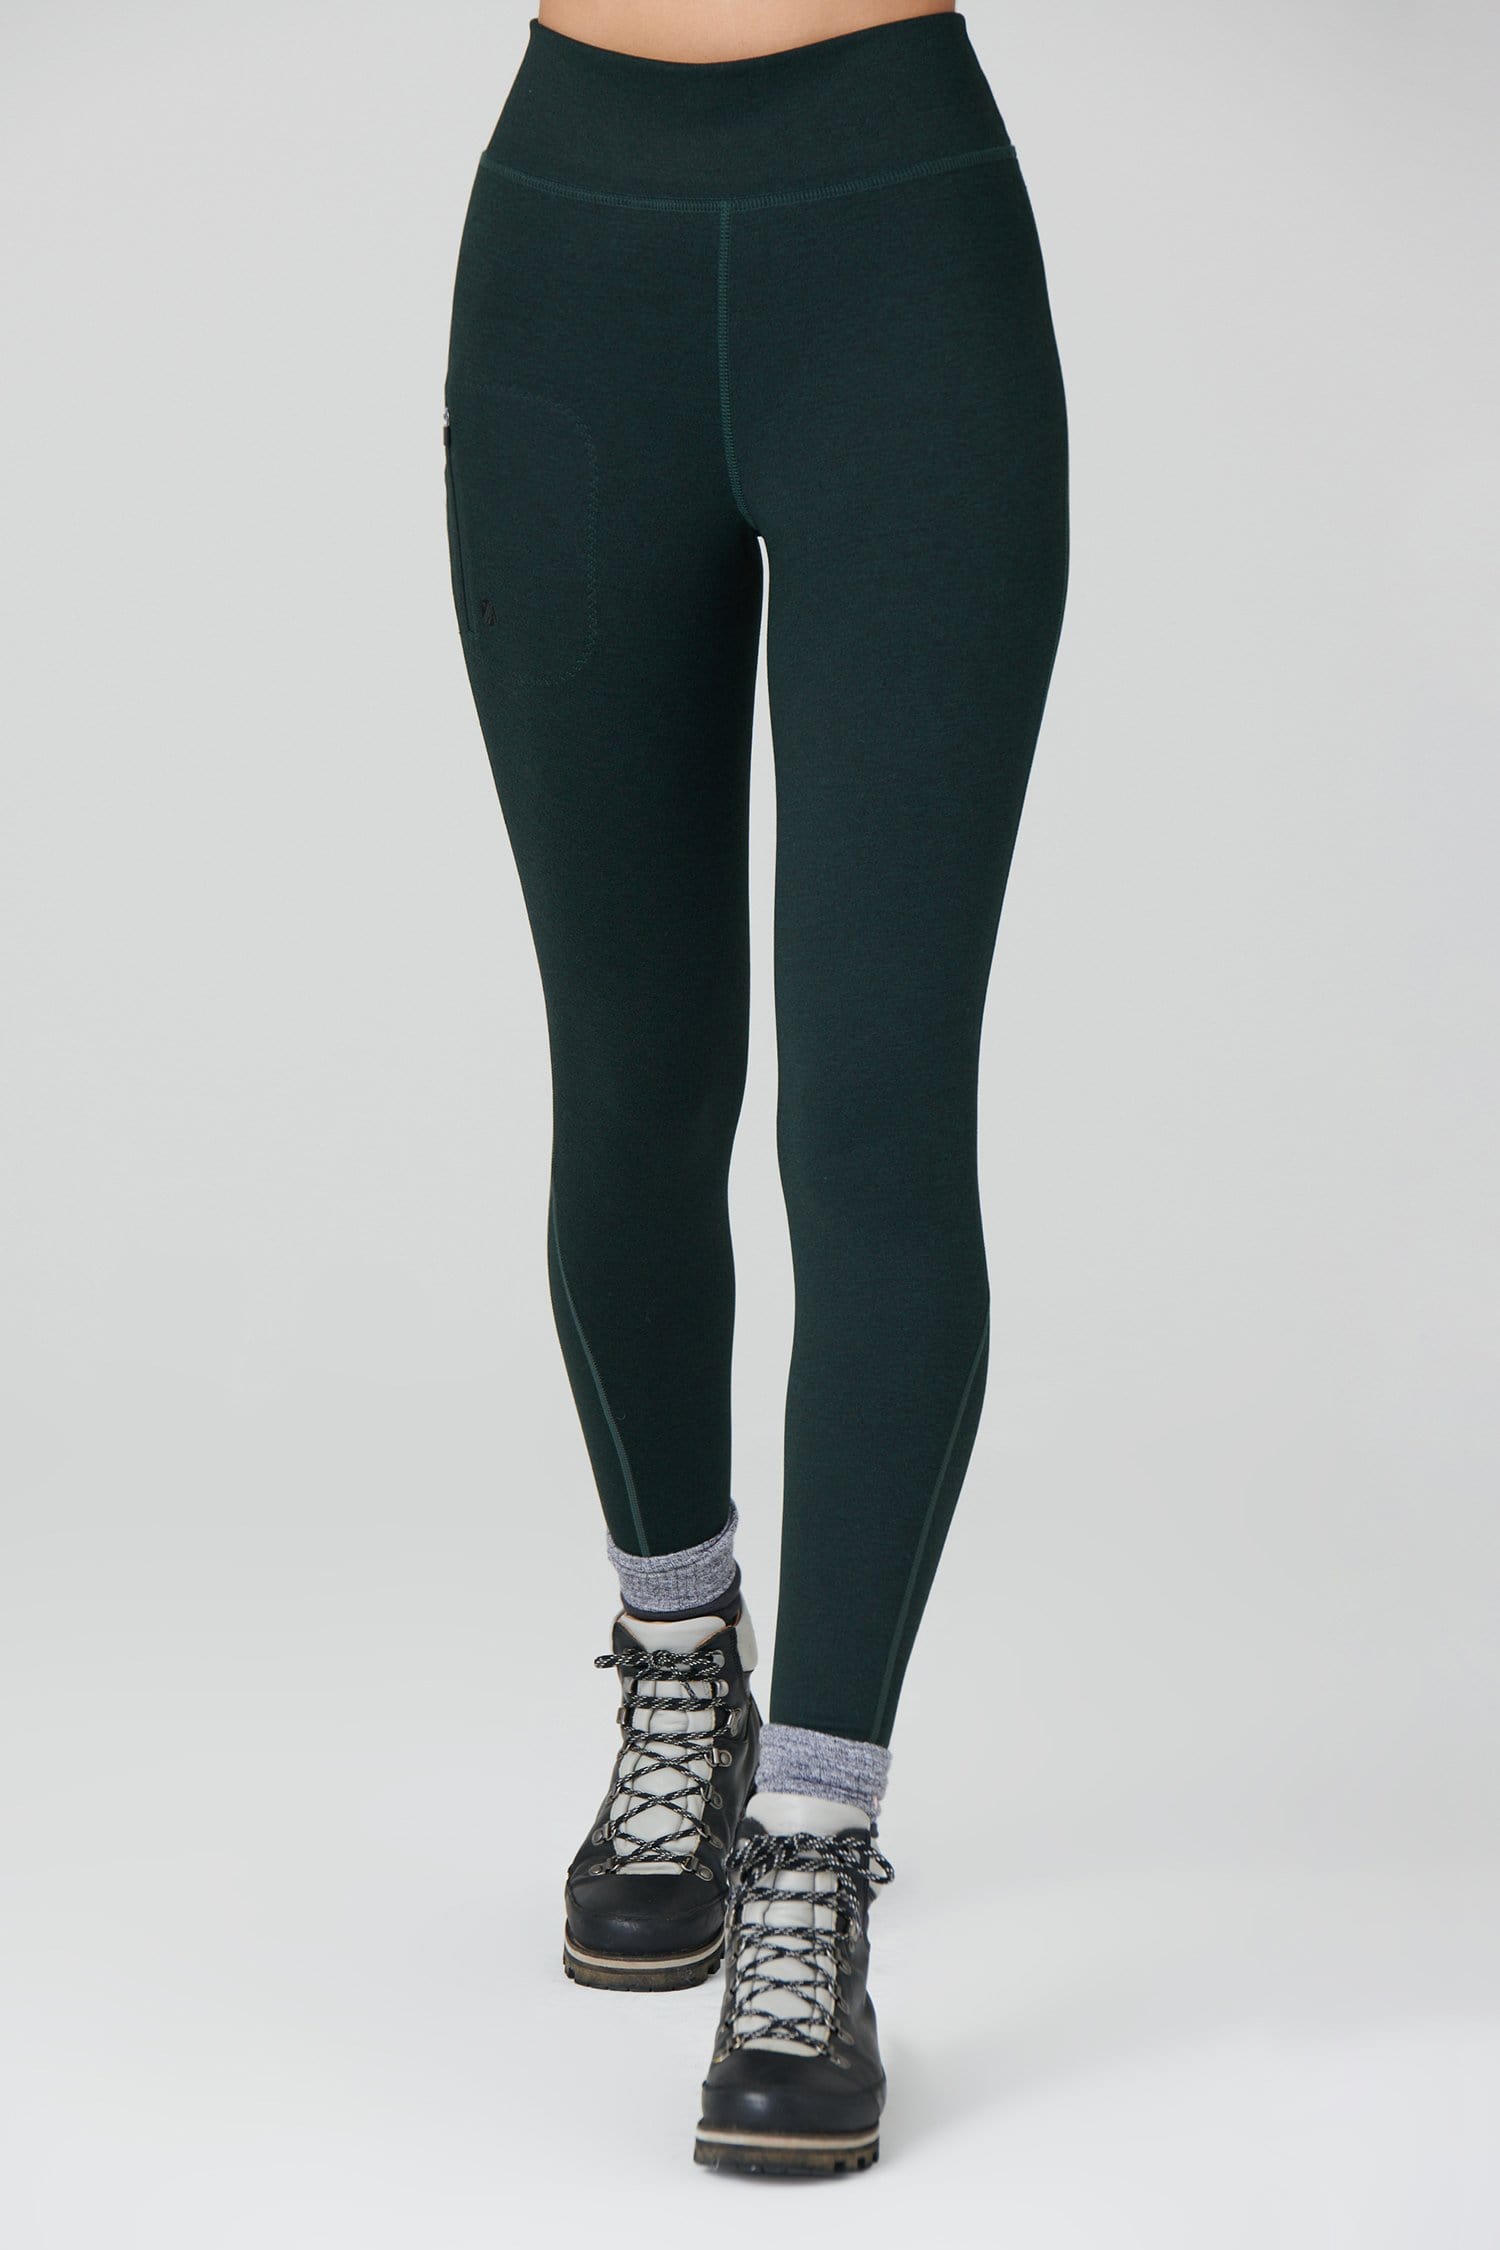 Thermal Outdoor Leggings - Forest Green - Medium / Uk12 - Womens - Acai Outdoorwear